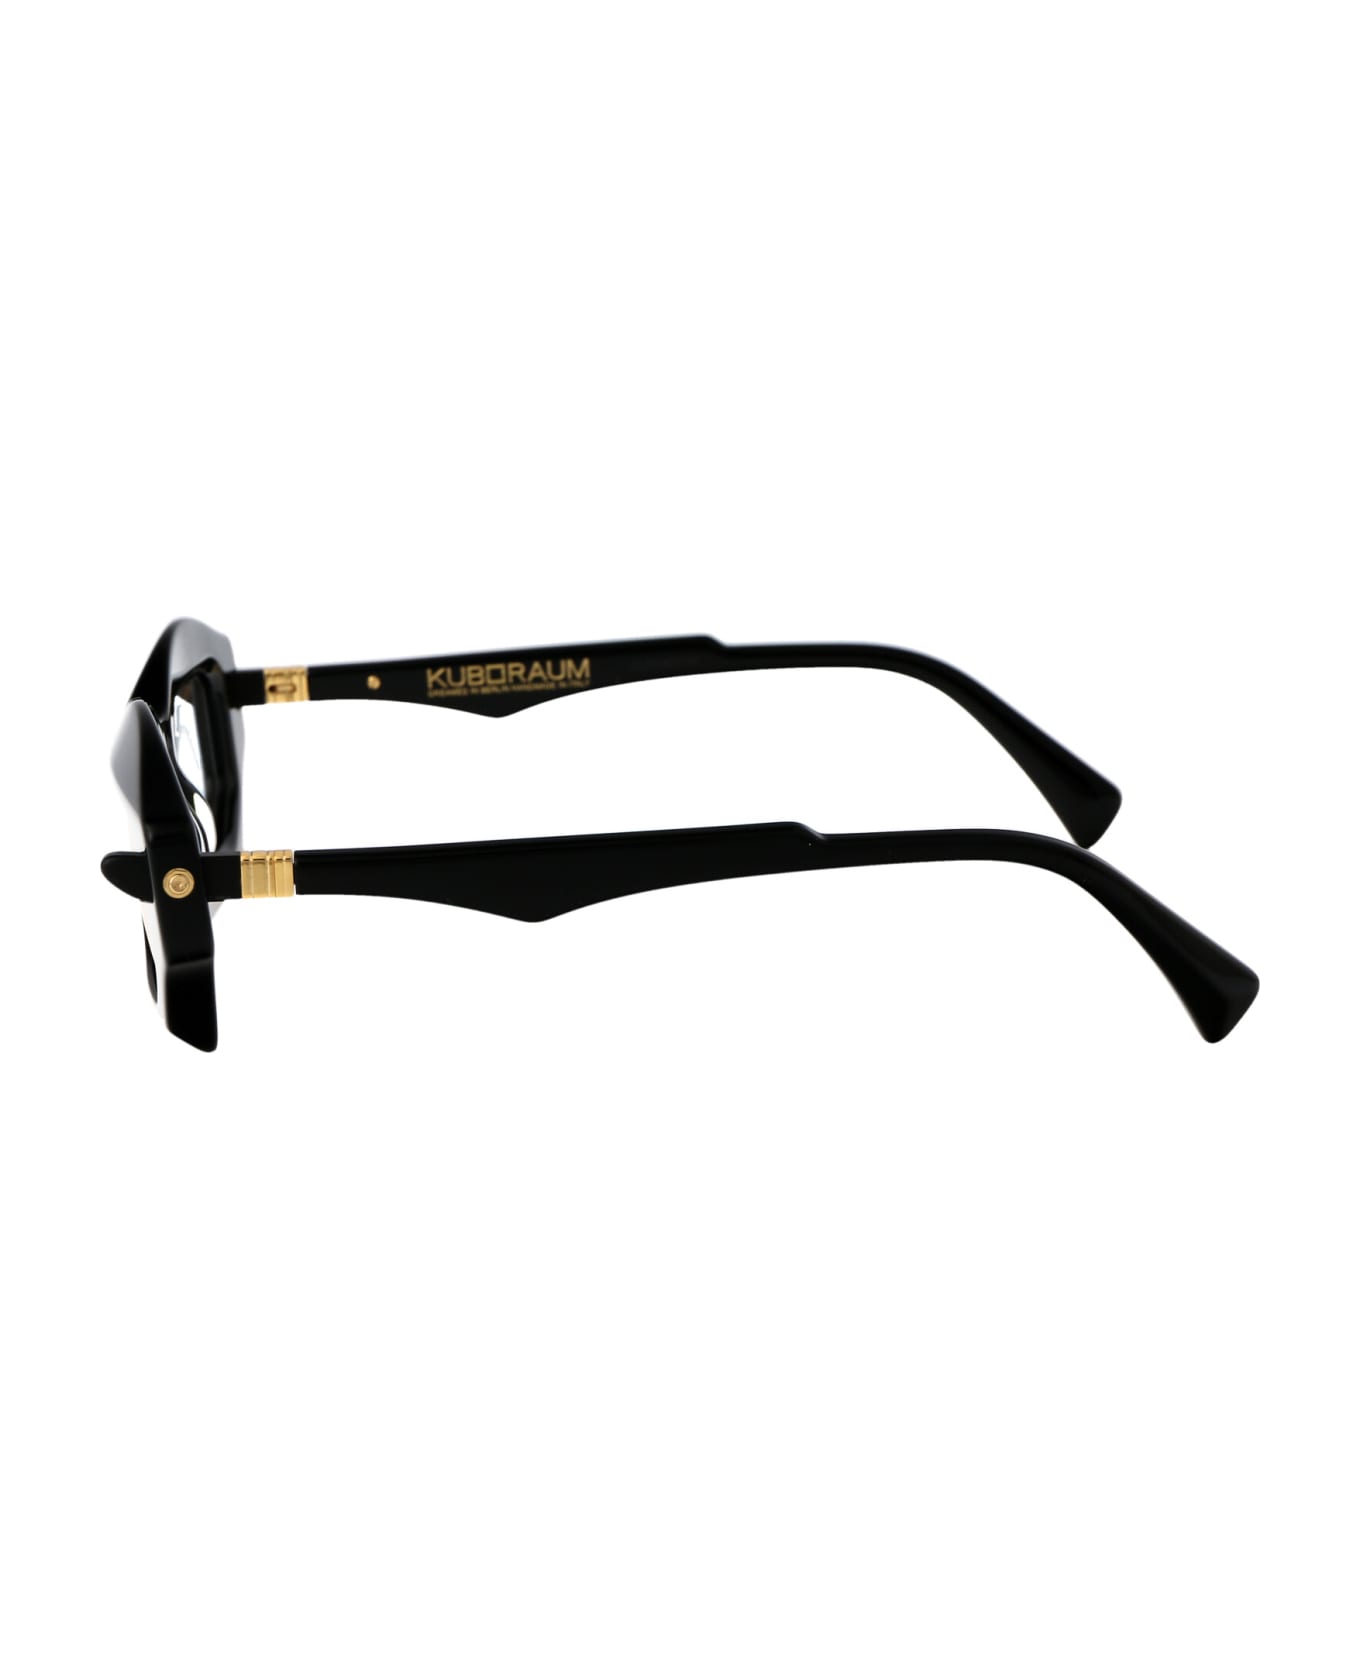 Kuboraum Maske T6 Sunglasses - VP 2grey